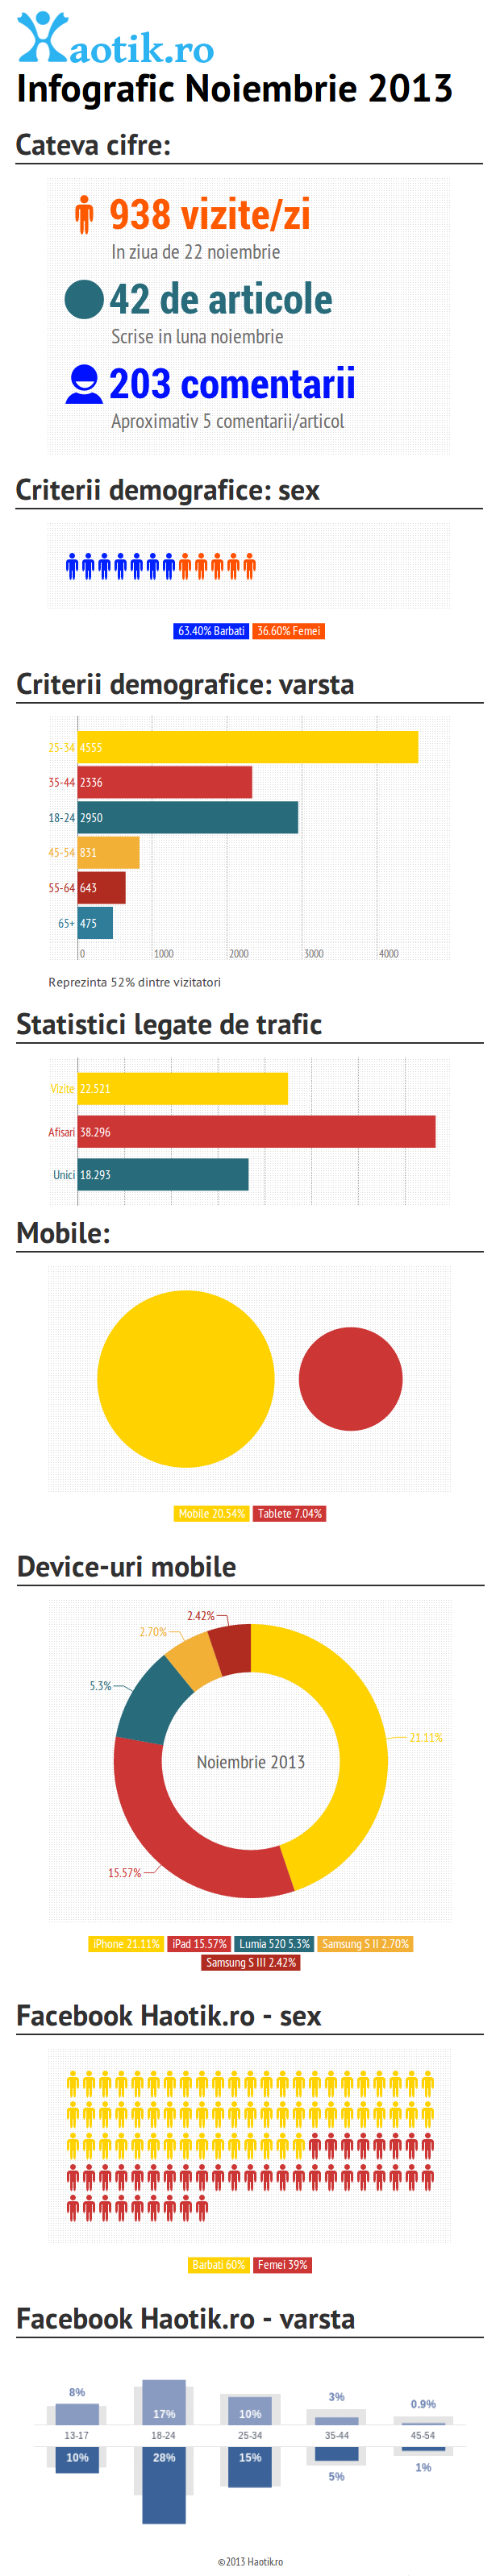 Infografic Haotik.ro Noiembrie 2013